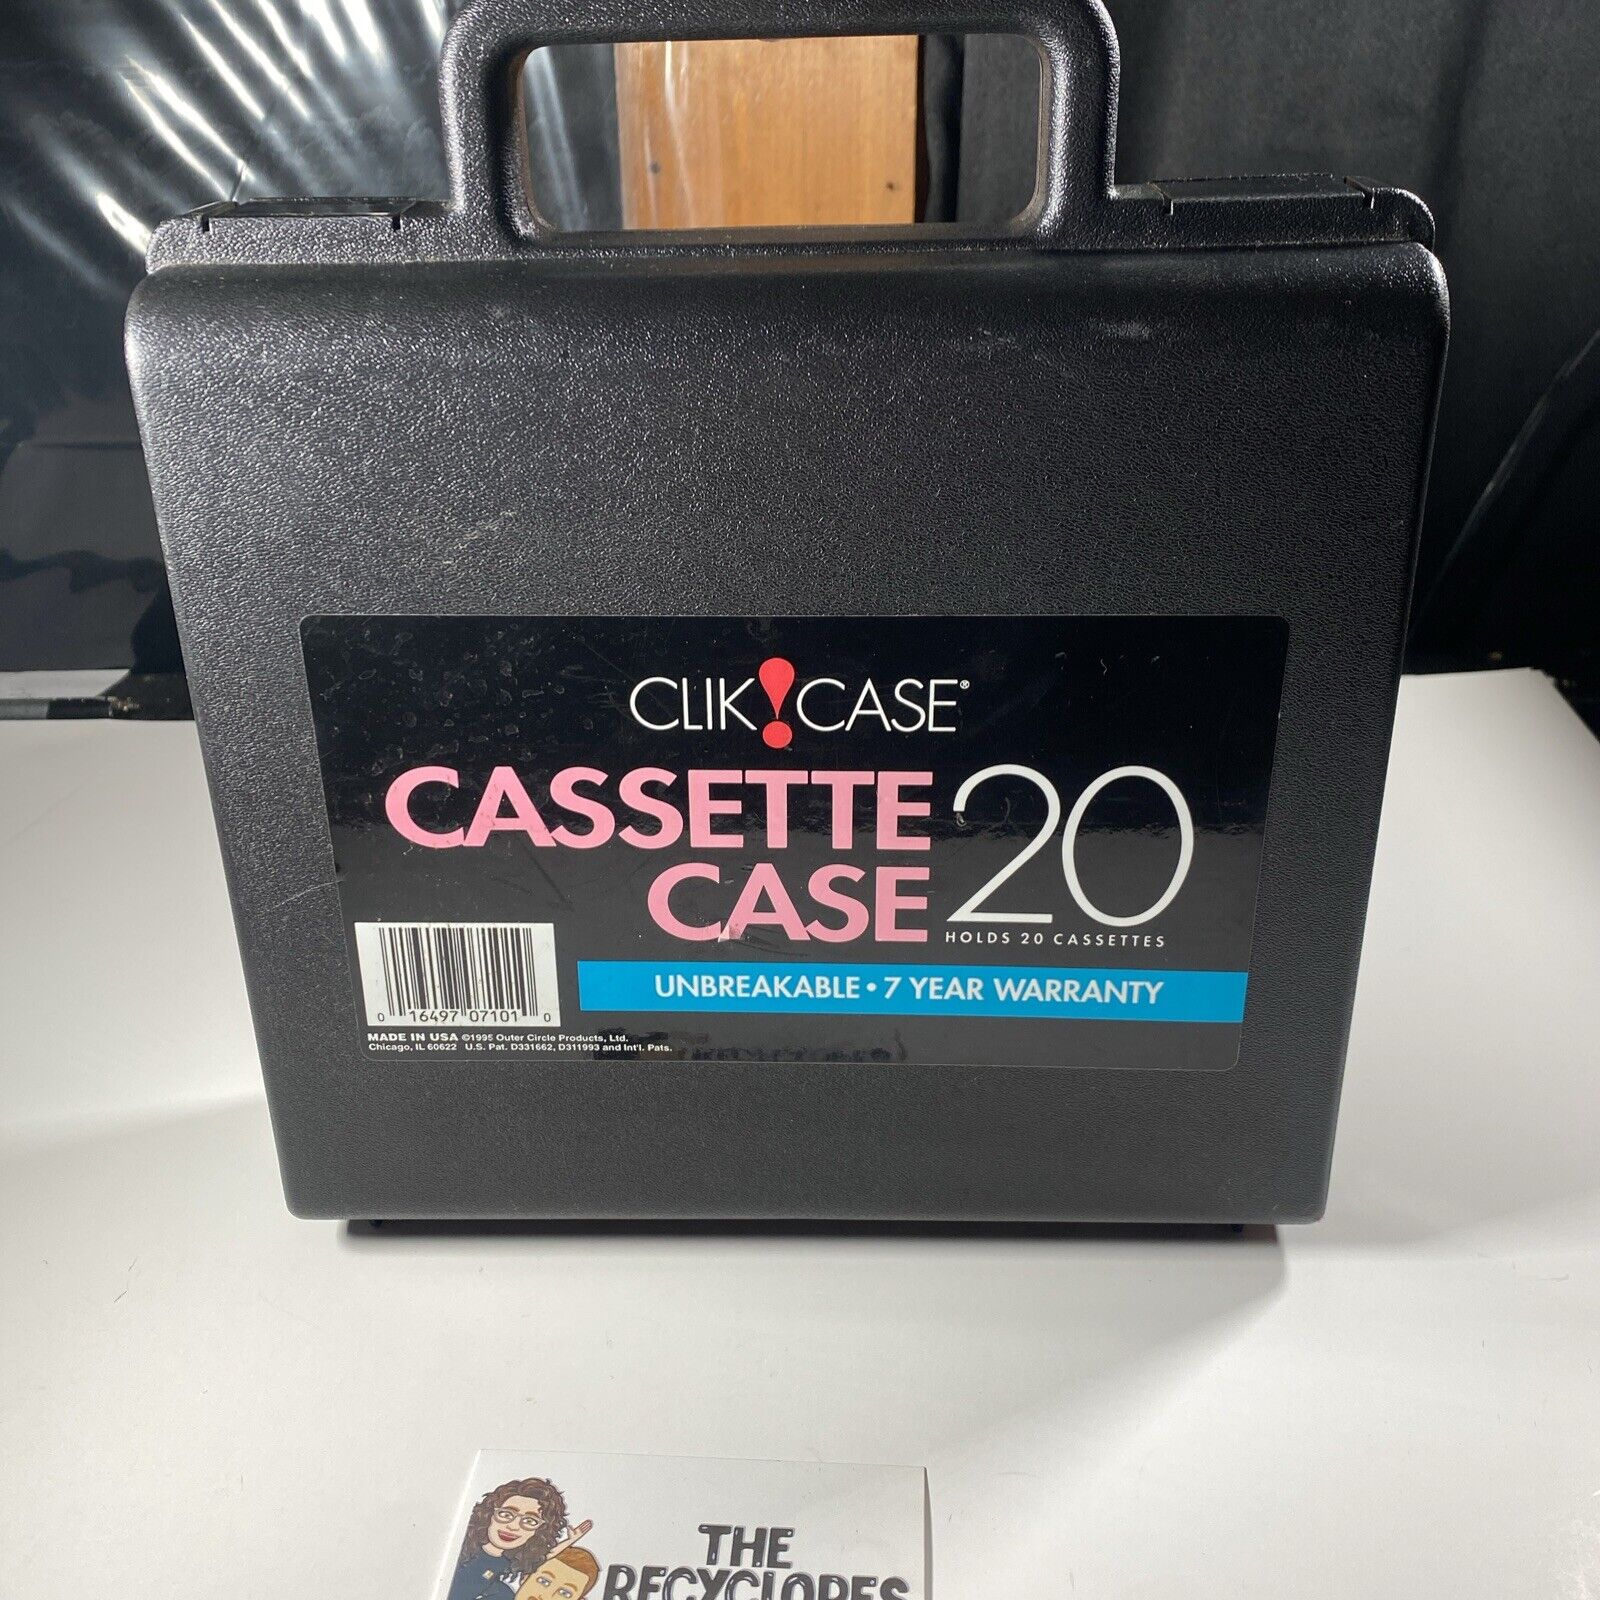 Vtg Clik Case Plastic Cassette Storage Black Carrying Case 20 Tapes Snap Closure